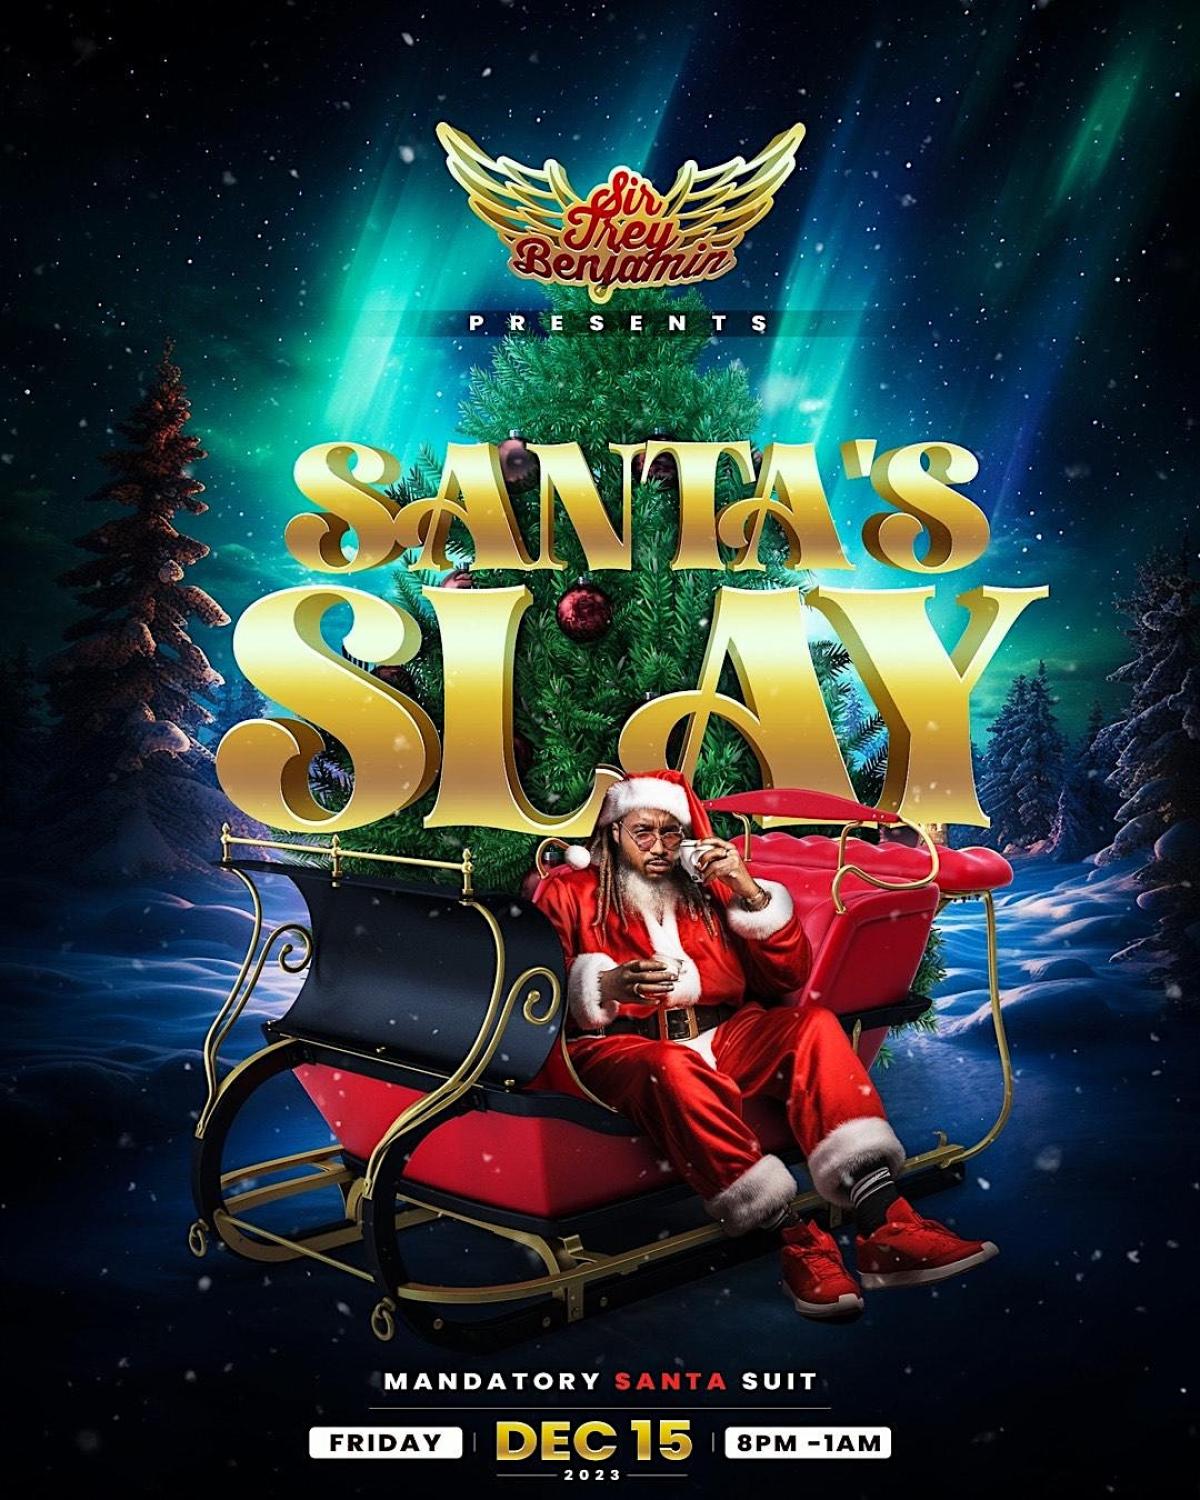 Santa's Slay flyer or graphic.